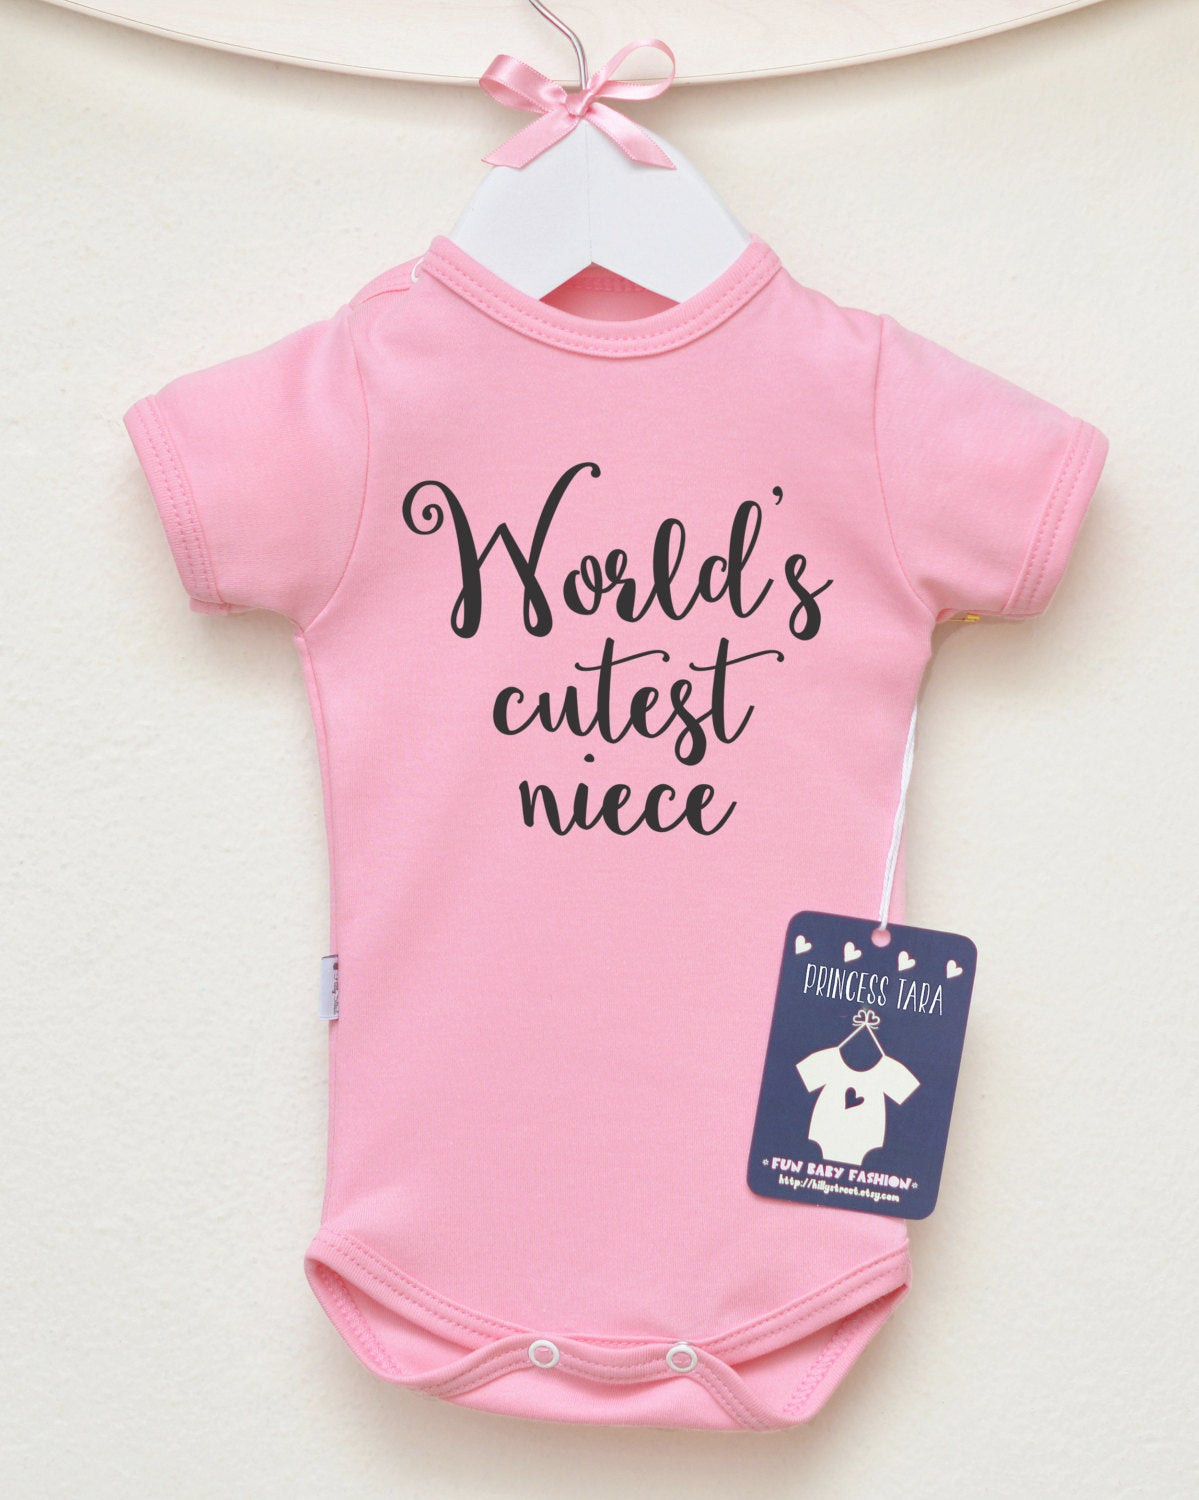 Baby Gifts From Aunt
 World s Cutest Niece Baby Bodysuit Aunt by LittlePrincessTara